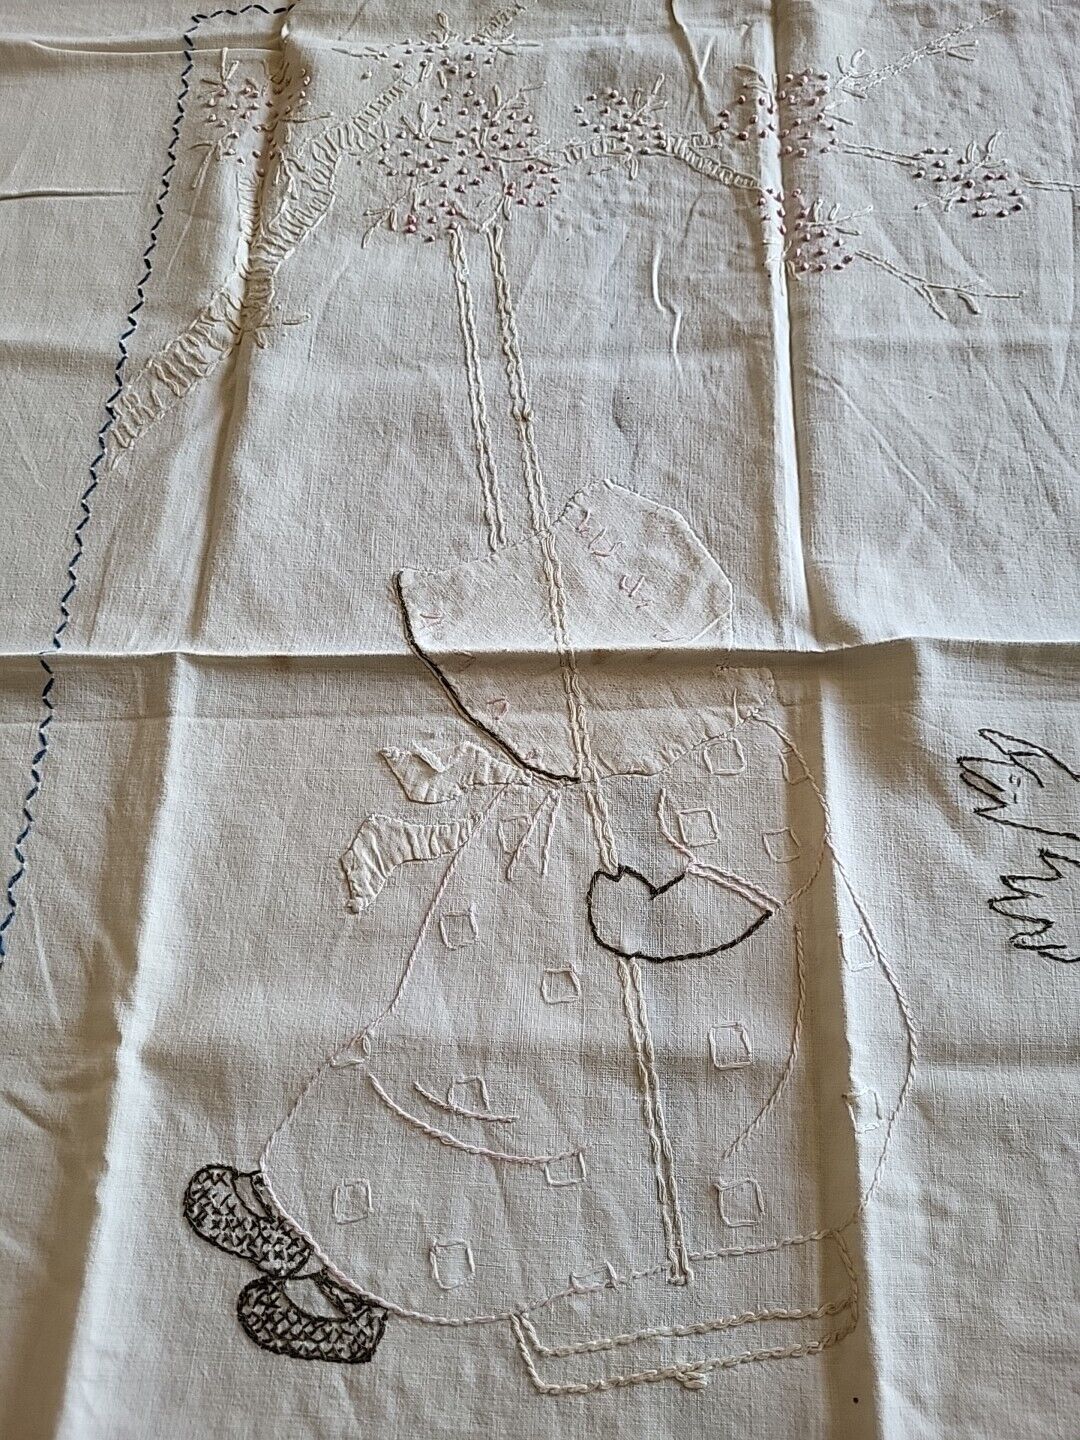 Sunbonnet Sue, Sam Vintage Quilt Top, Coverlet, Hand Embroidered